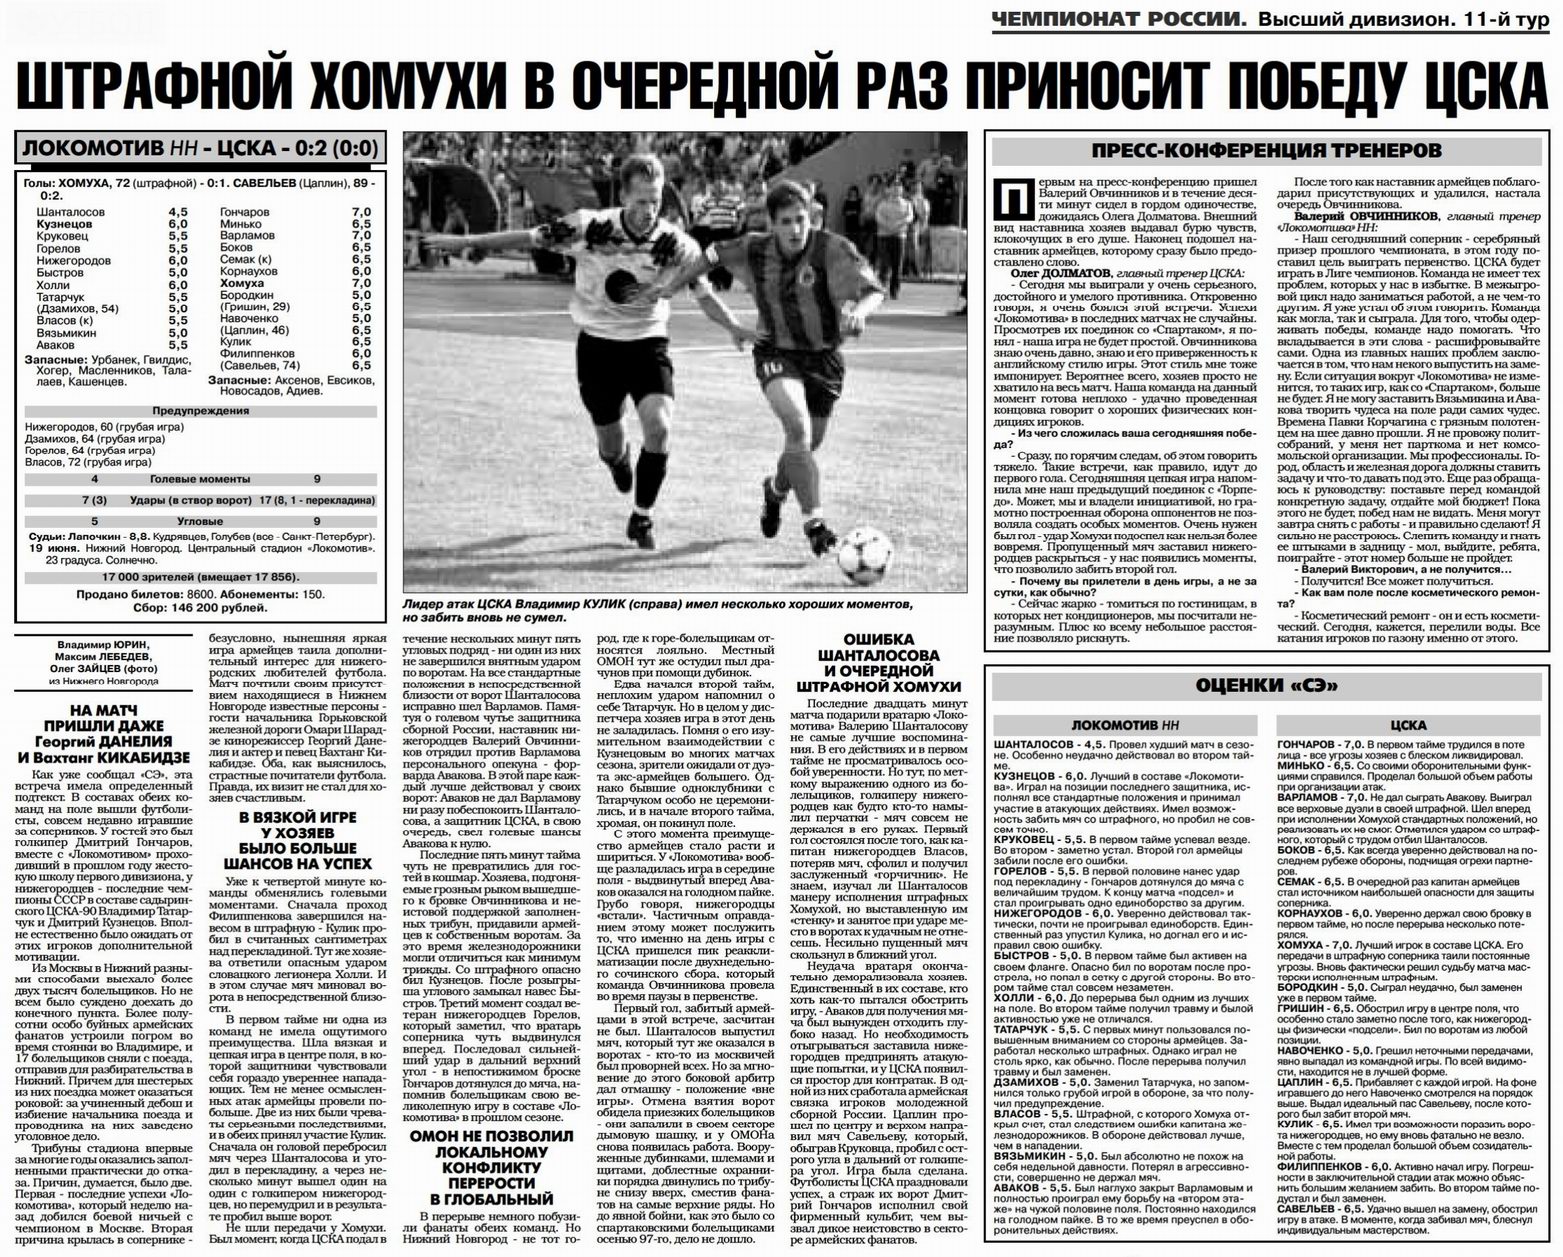 1999-06-19.LokomotivNN-CSKA